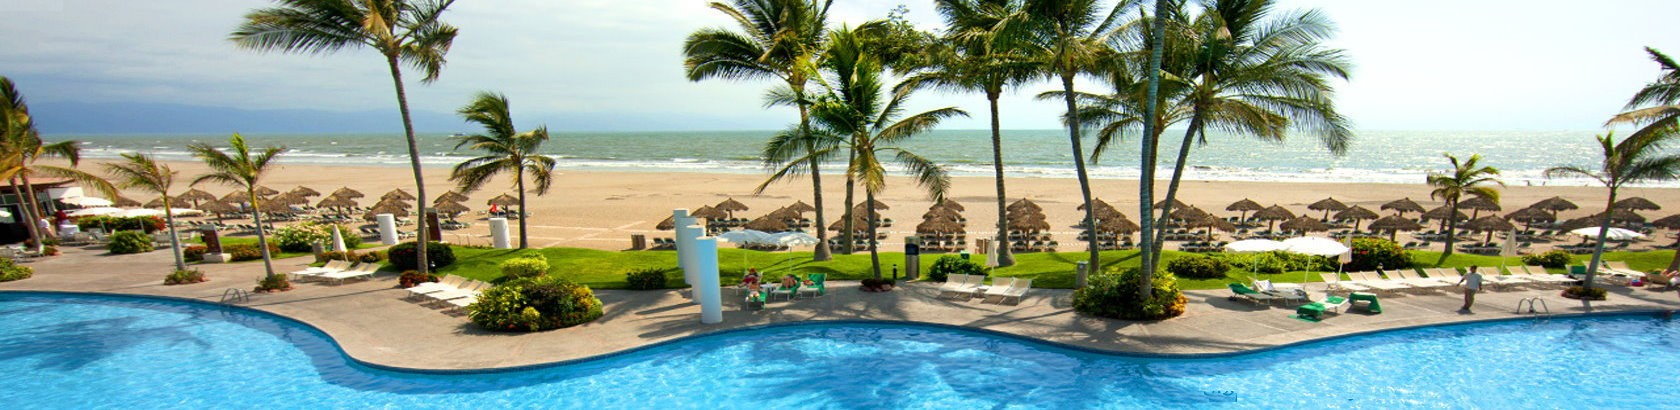 5 Star Beach Resorts